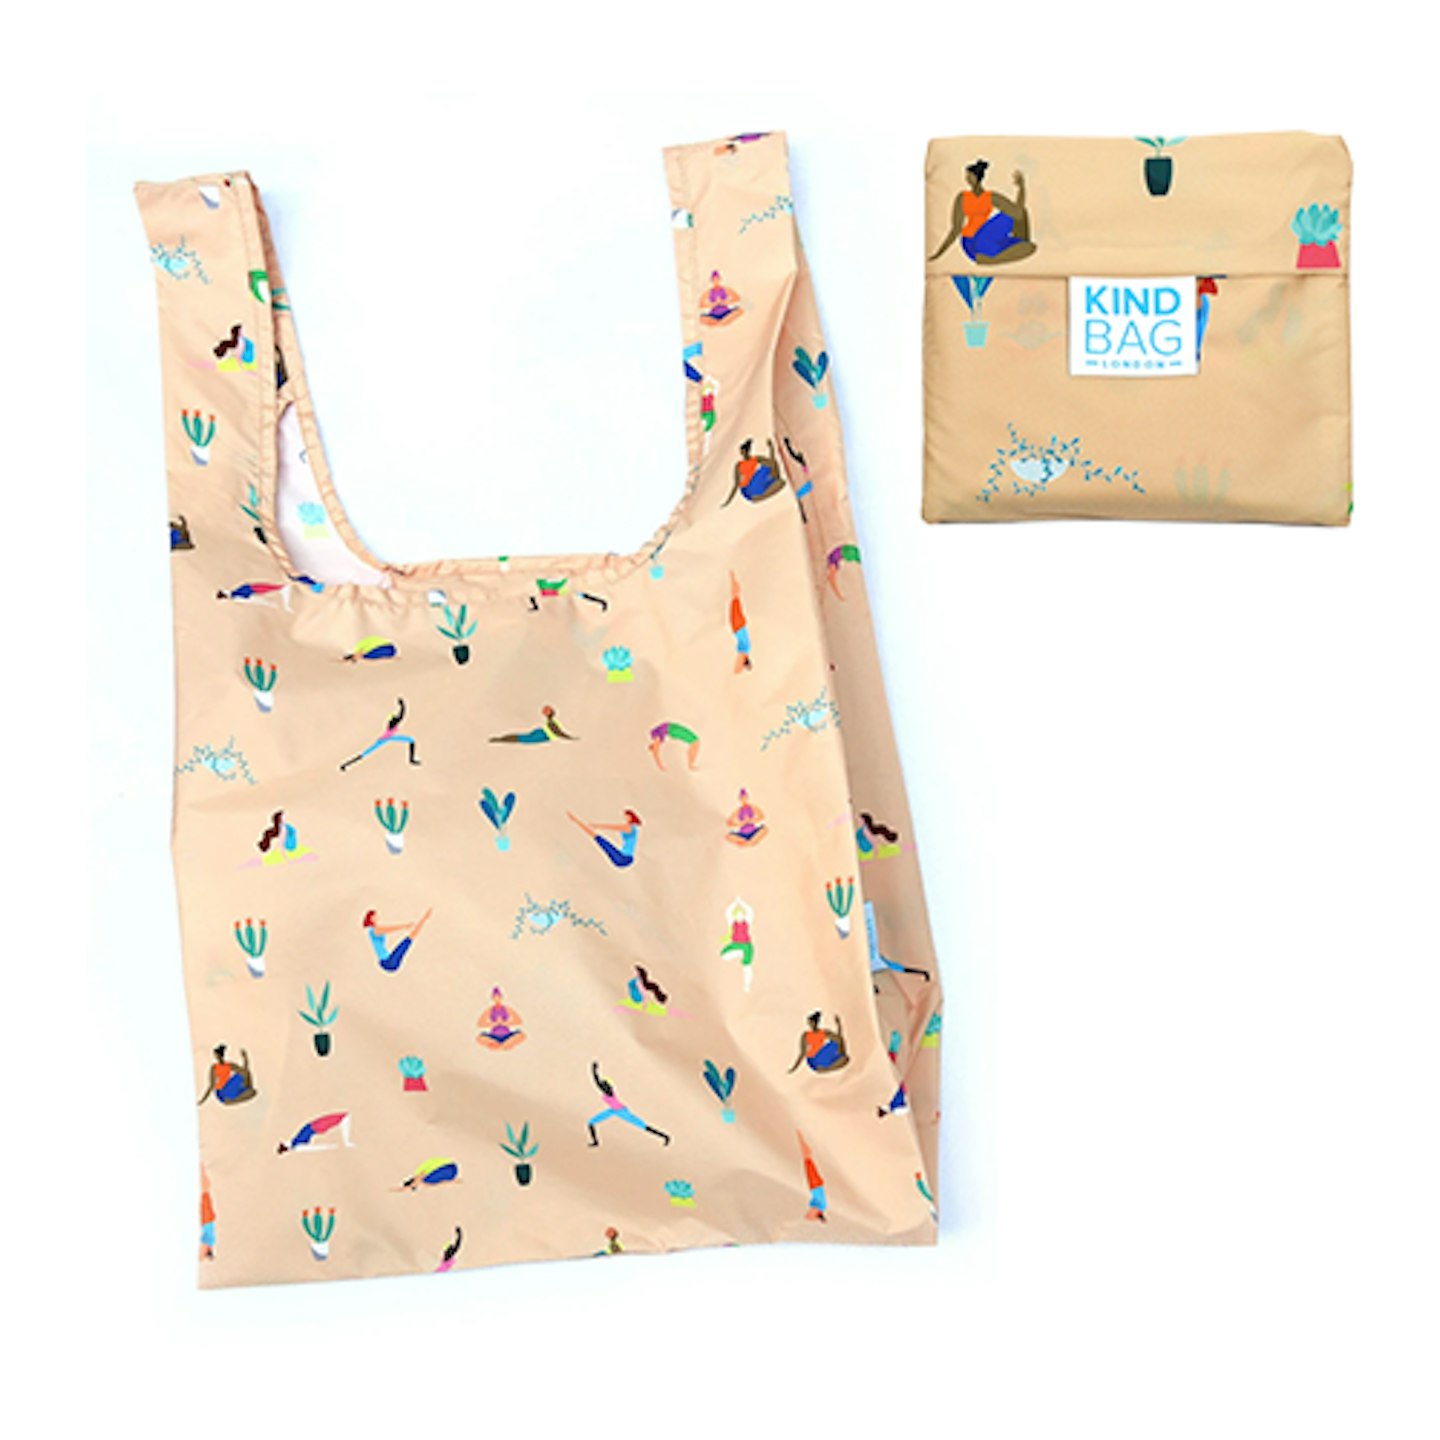 Kind Bag London Yoga Girls - 100% recycled reusable bag - Medium